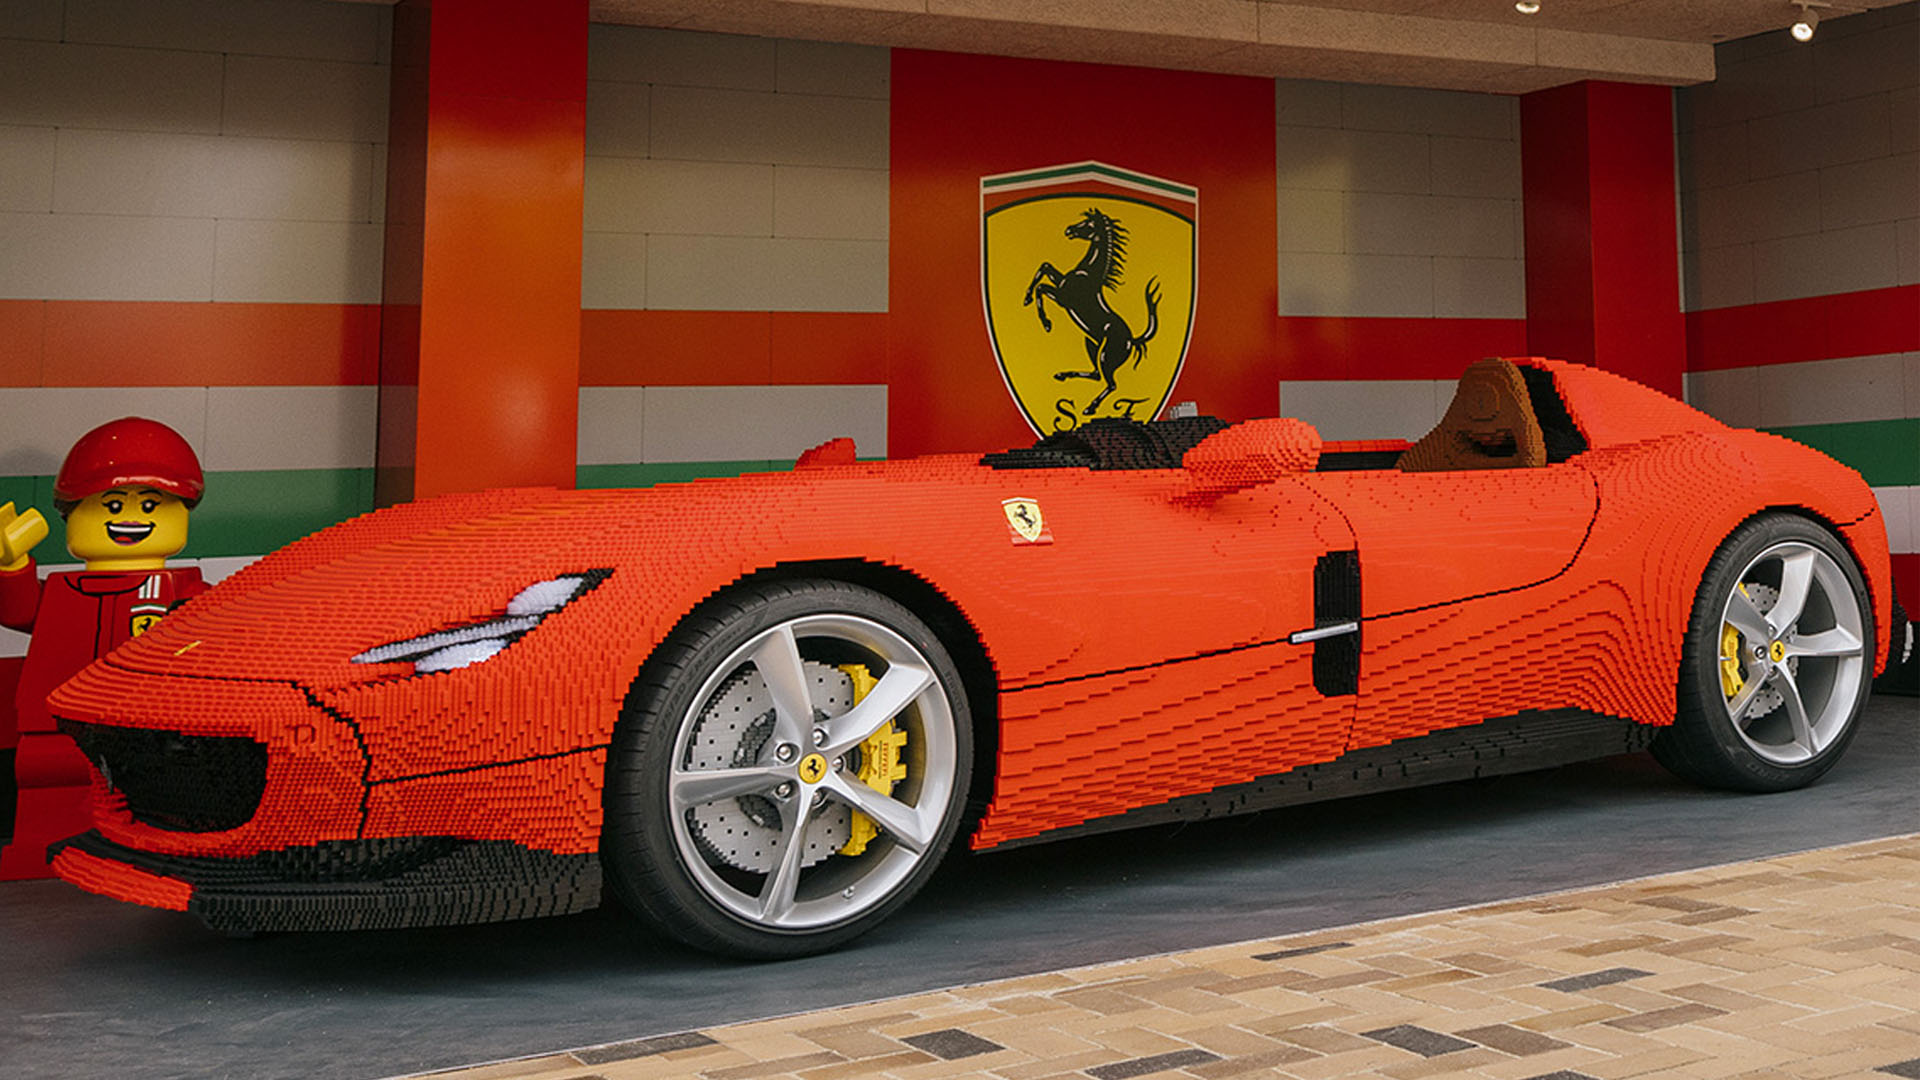 This Full-Size Lego Ferrari Monza SP1 Has More Than 383,000 Bricks